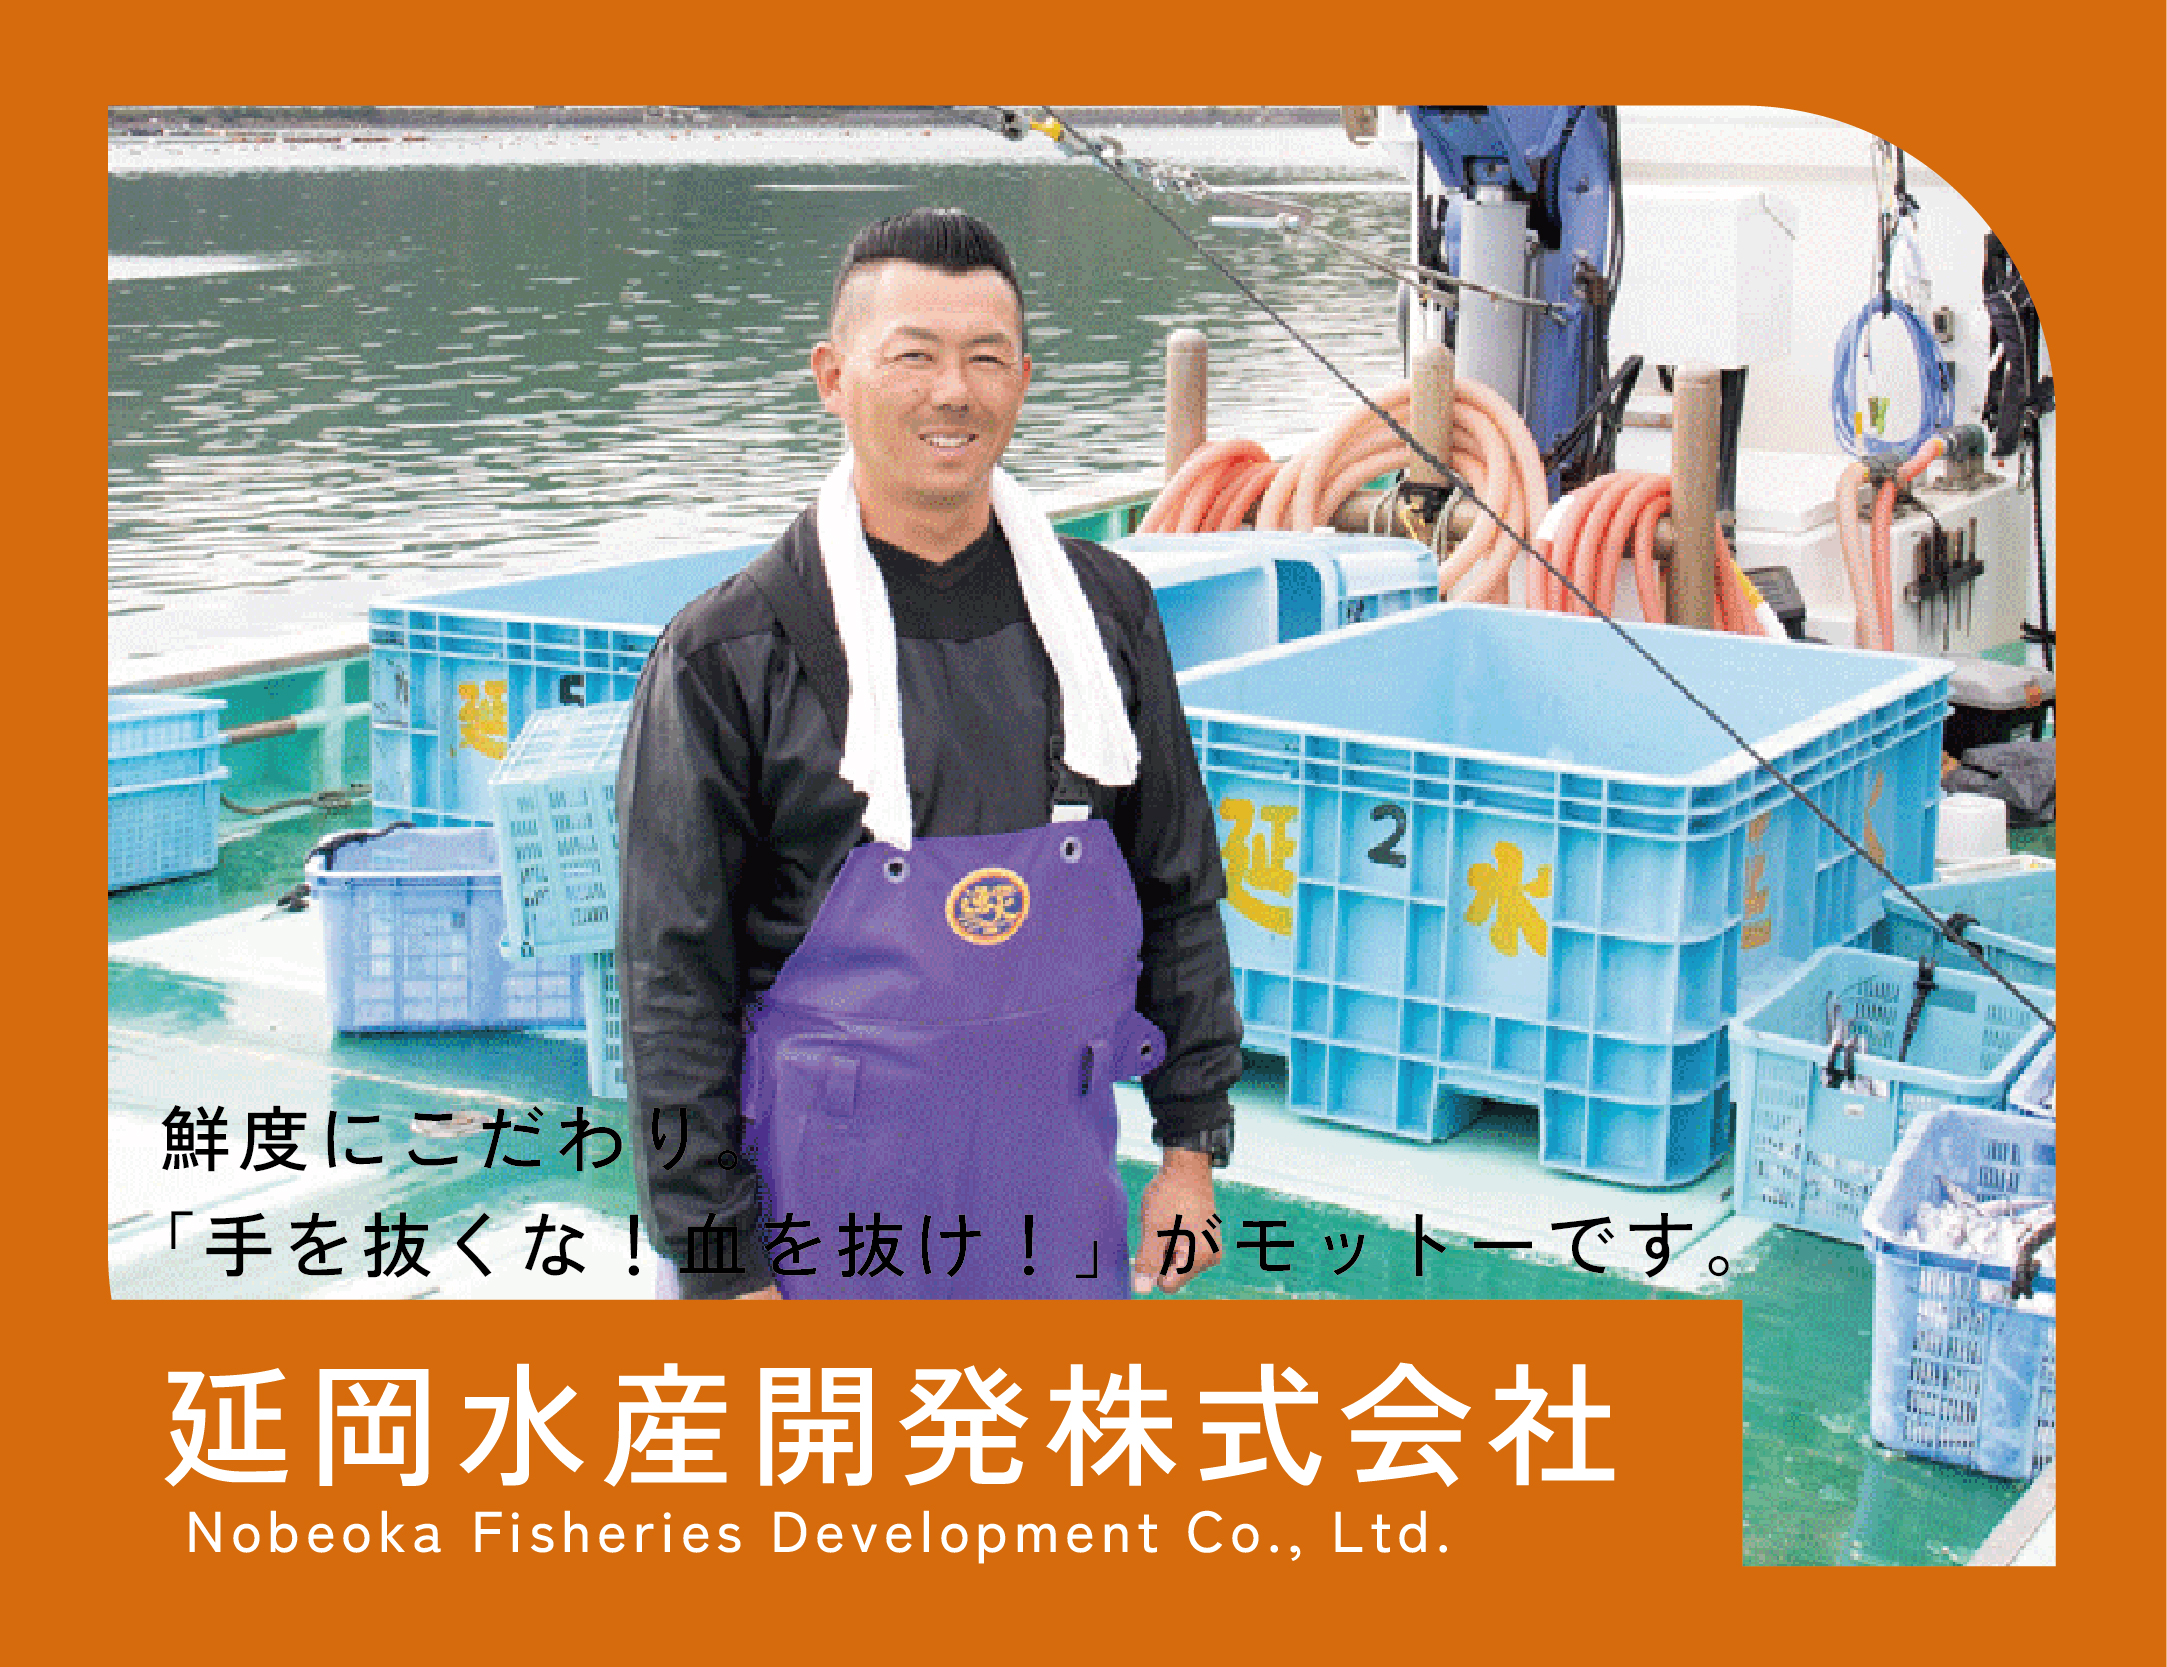 Nobeoka Fisheries Development Co., Ltd.